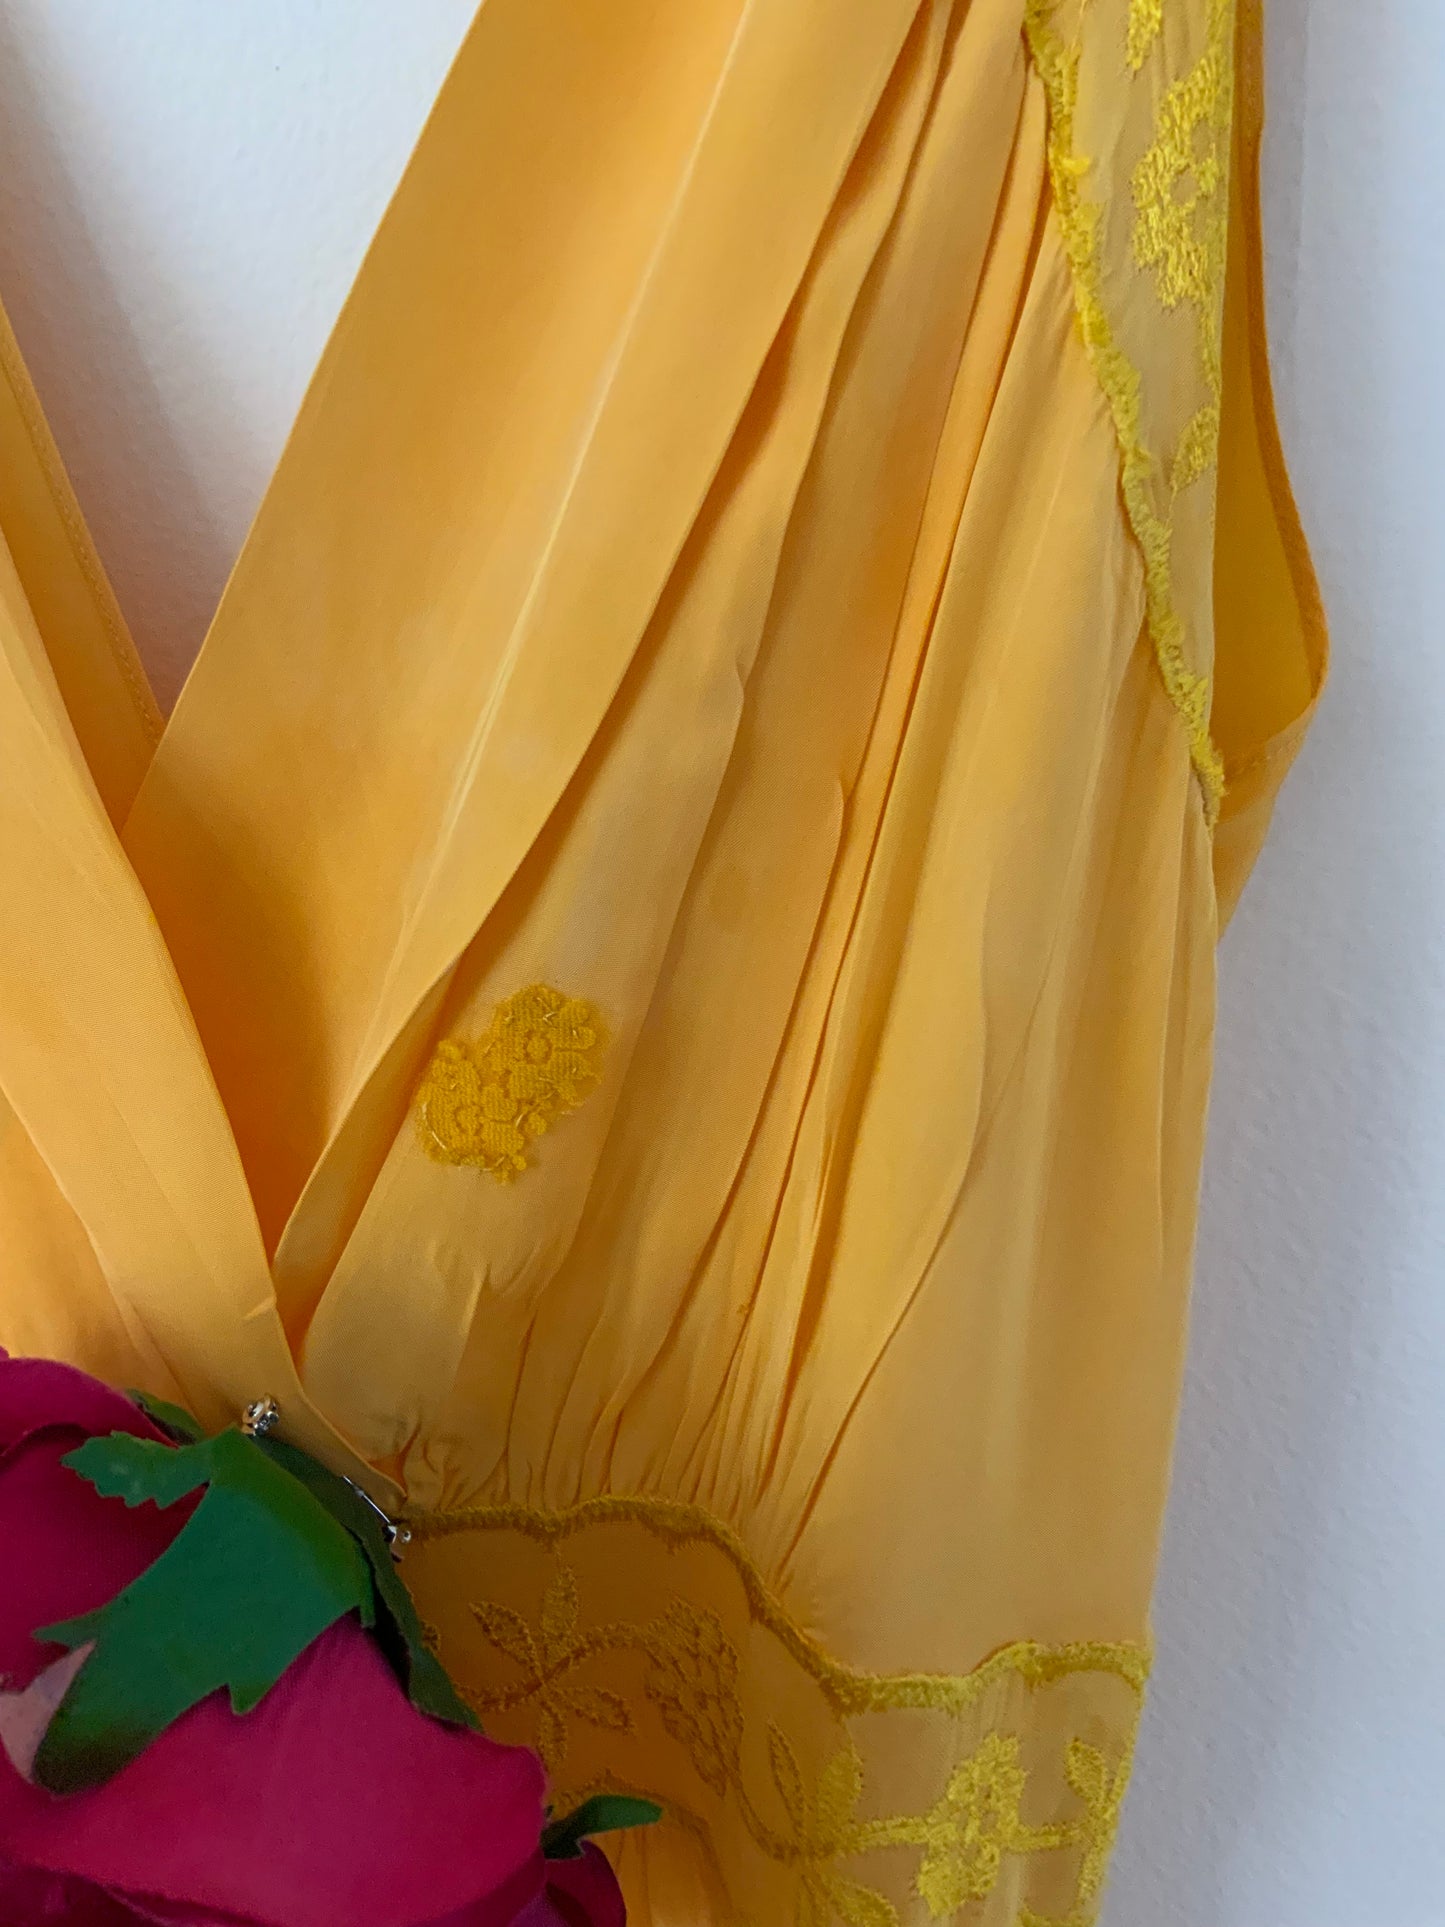 Hand Dyed Yellow Nightgown / Slip Dress - 50s